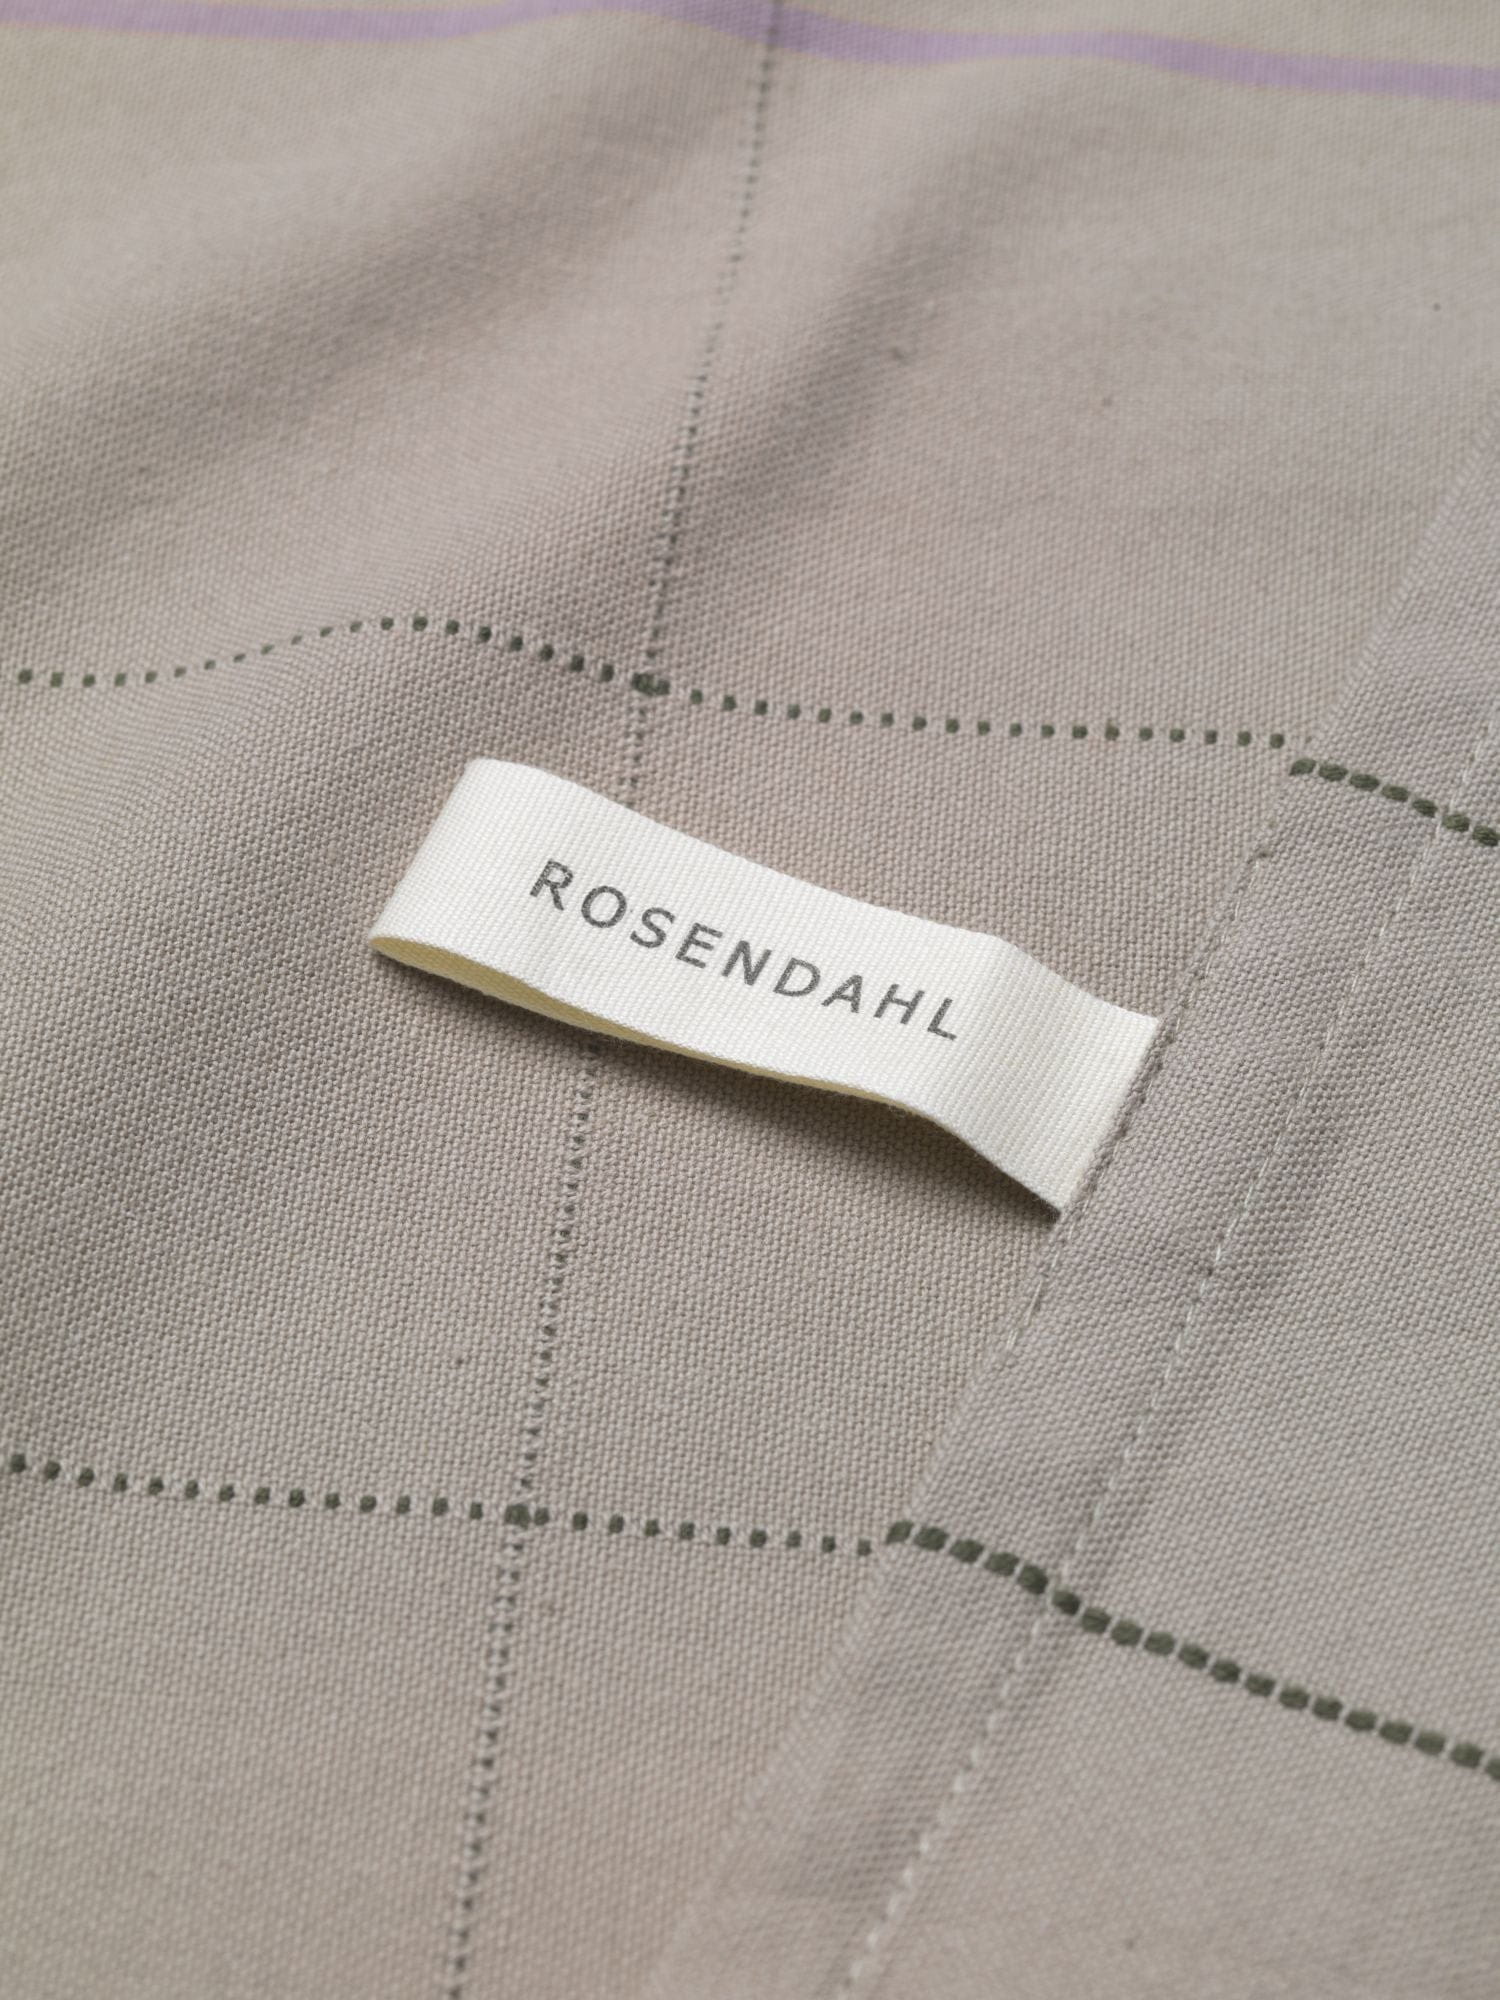 Rosendahl Rosendahl Textiel gamma theedoek 50x70 cm, zand